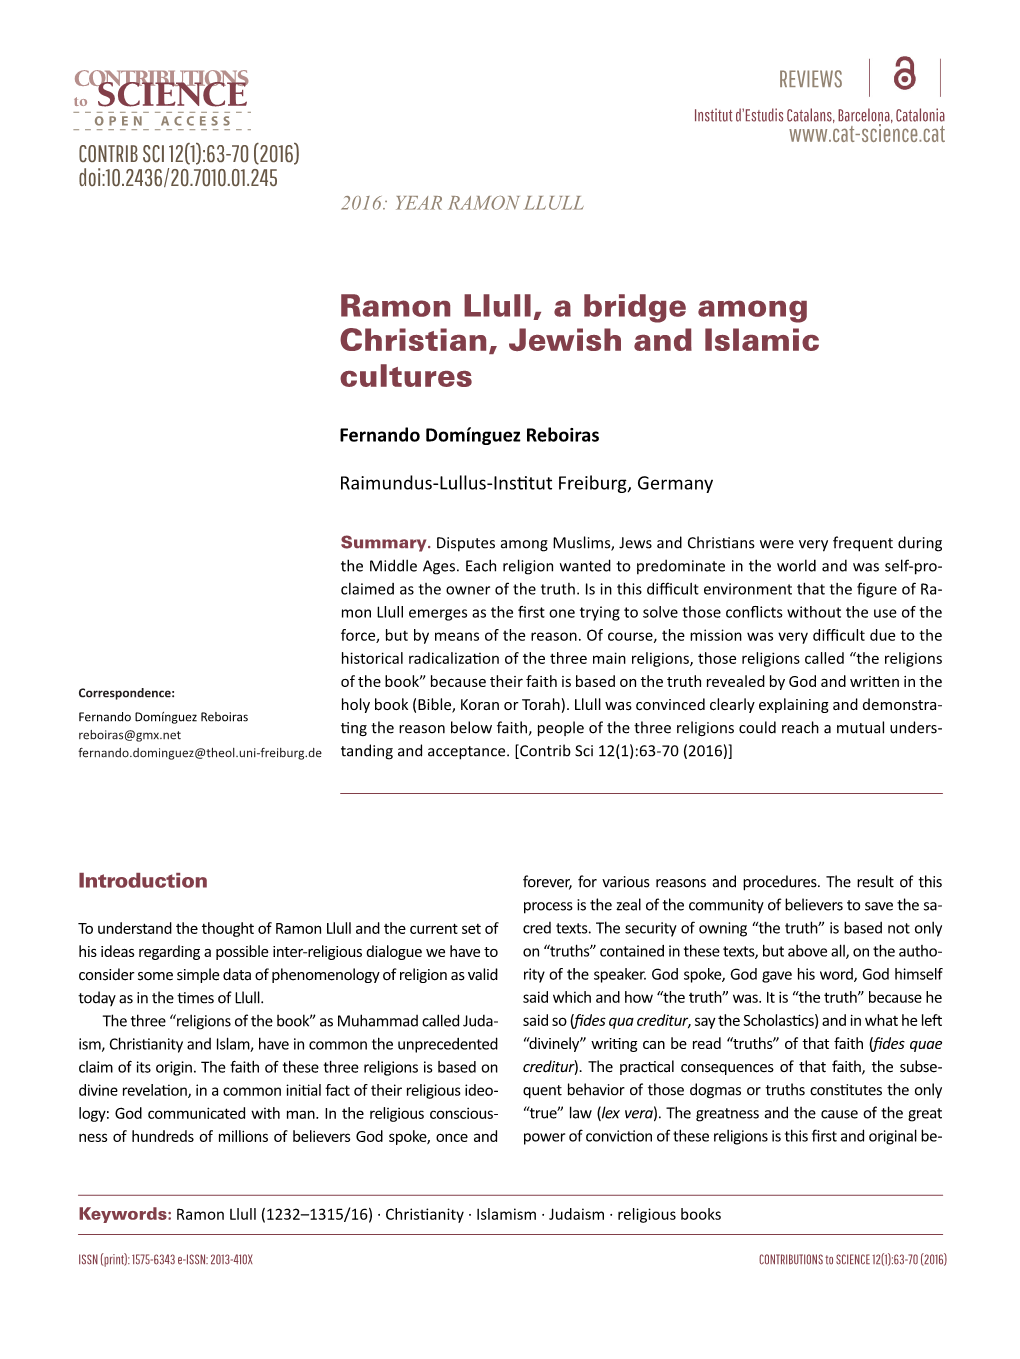 Ramon Llull, a Bridge Among Christian, Jewish and Islamic Cultures